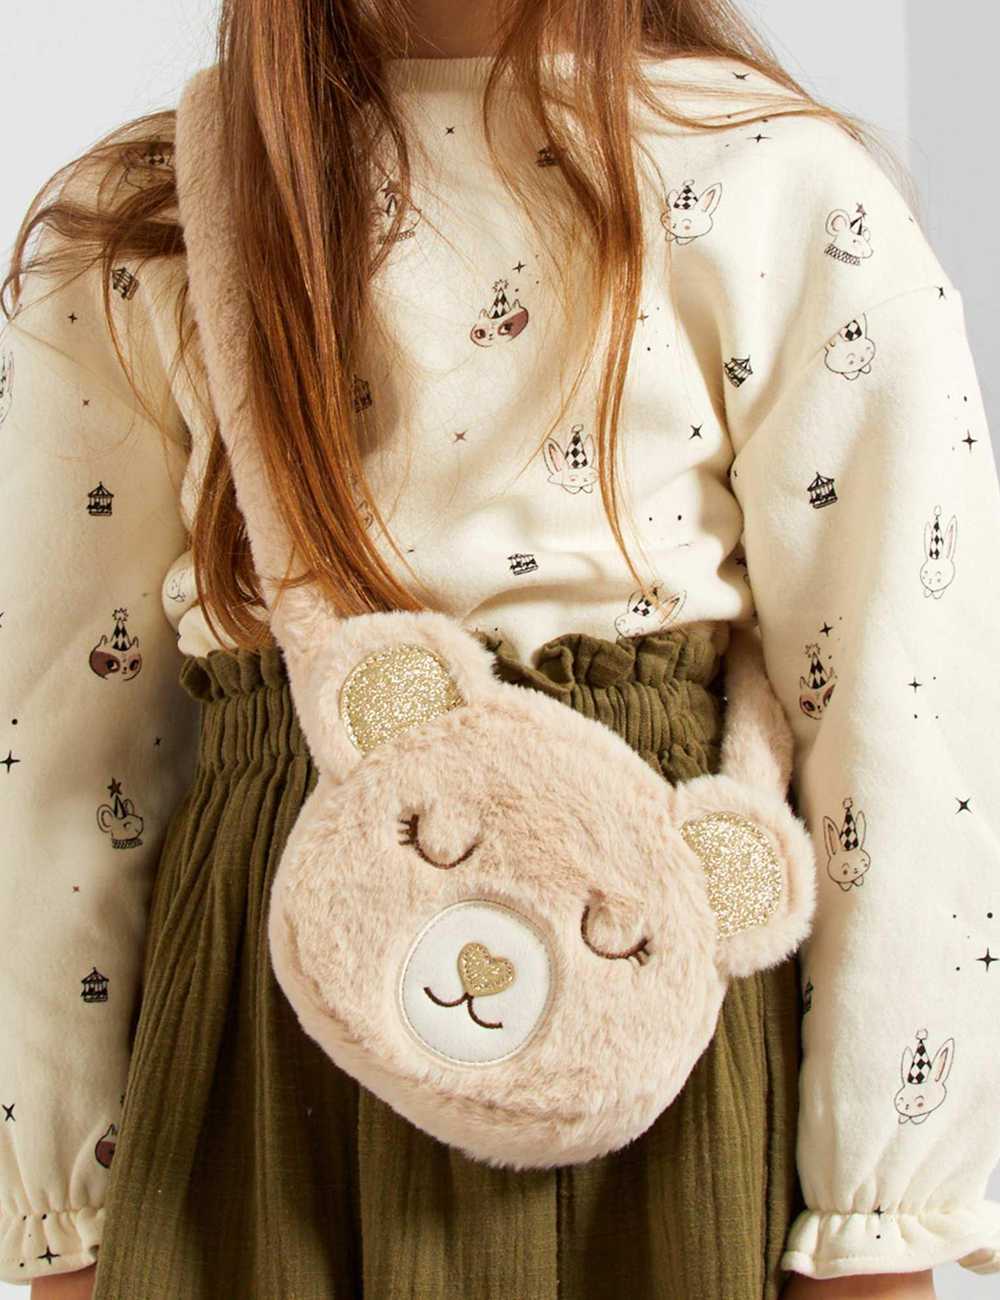 Buy Teddy bear bag Online in Dubai & the UAE